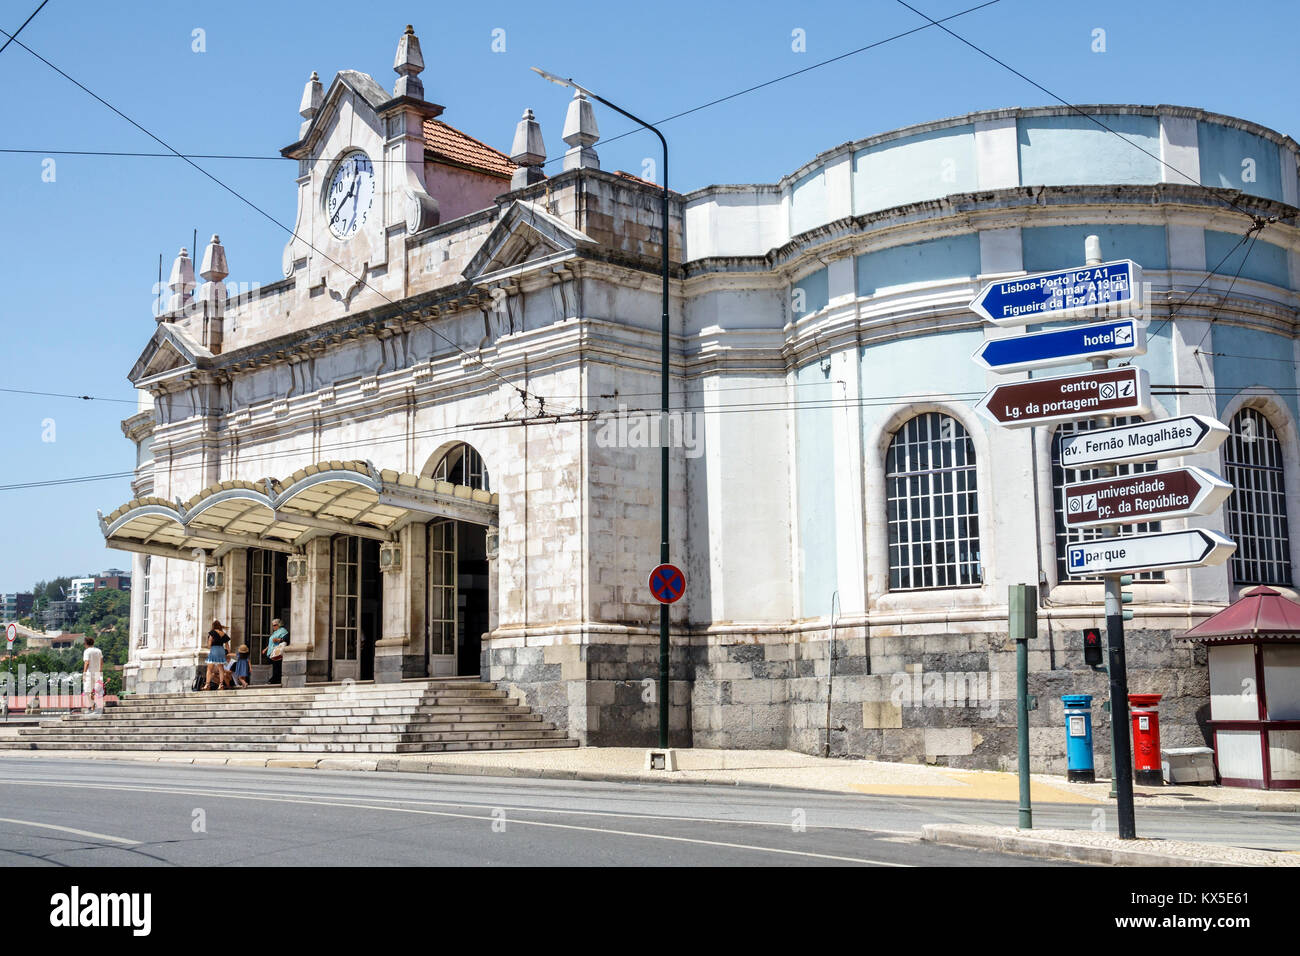 Coimbra Portugal,historic center,Estacao Nova,New Station,railway,train,exterior outside,entrance,clock,Hispanic,immigrant immigrants,Portuguese,PT170 Stock Photo